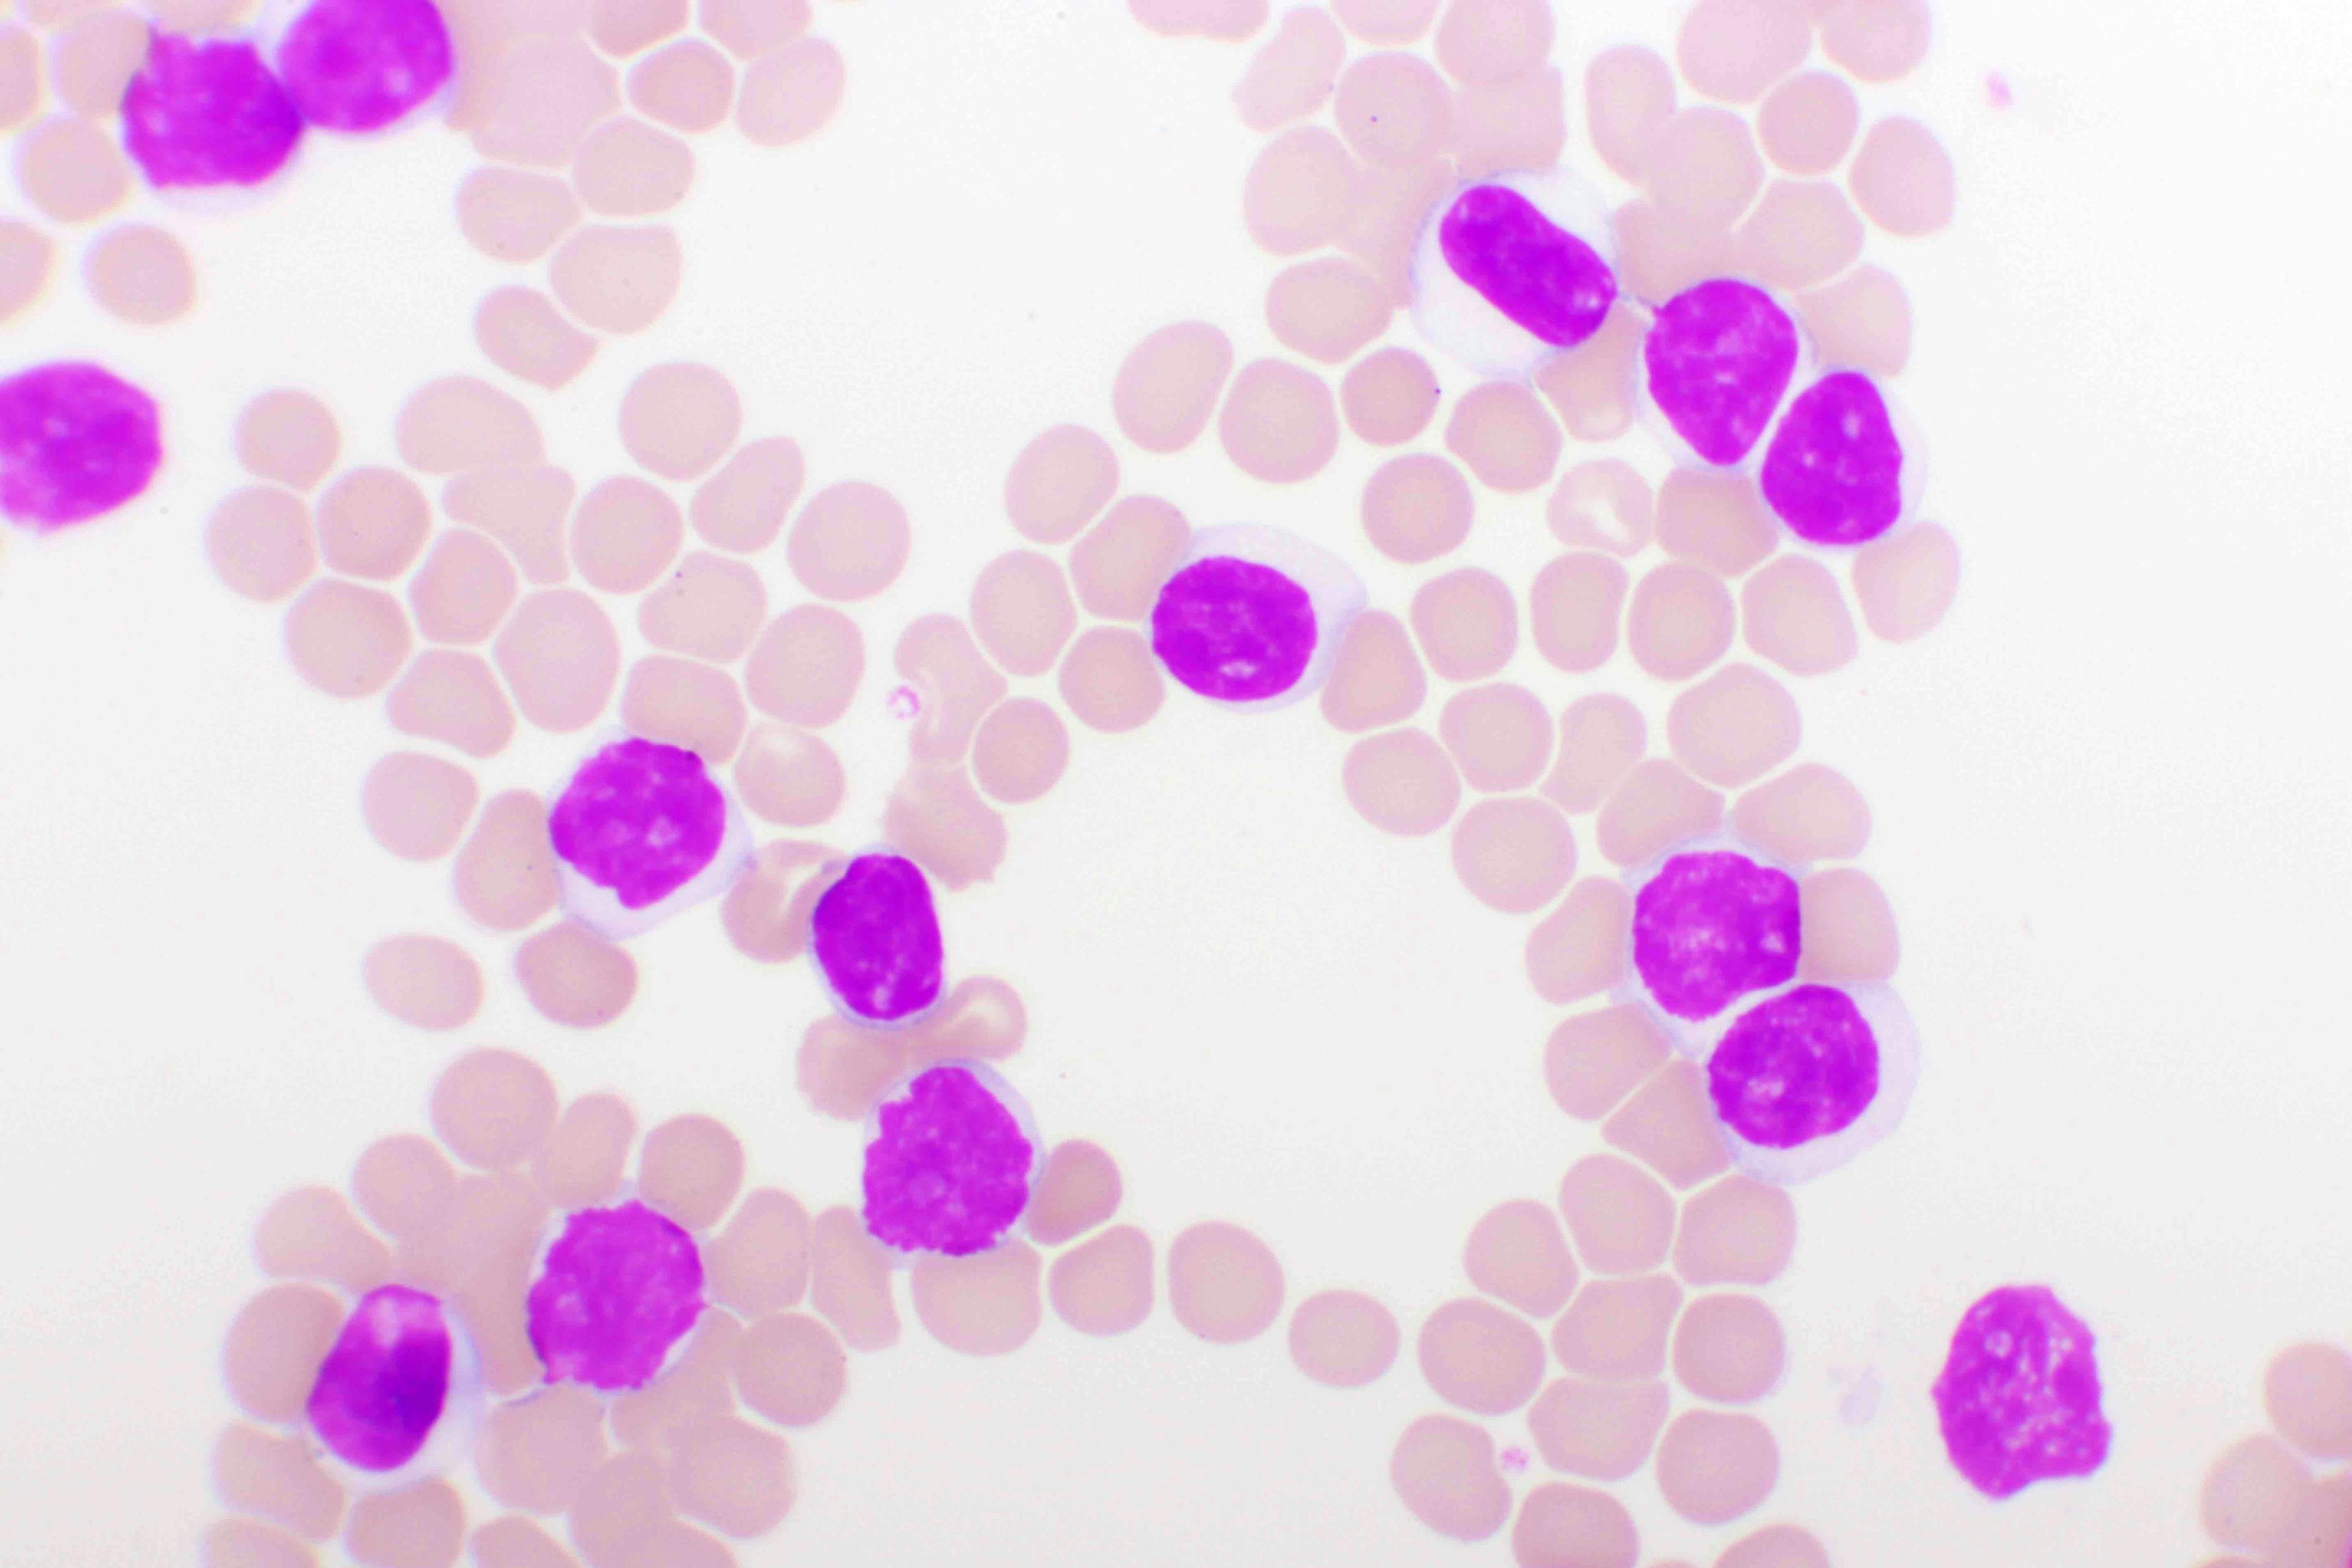 Chronic lymphocytic leukemia | Image credit: jarun011 - stock.adobe.com